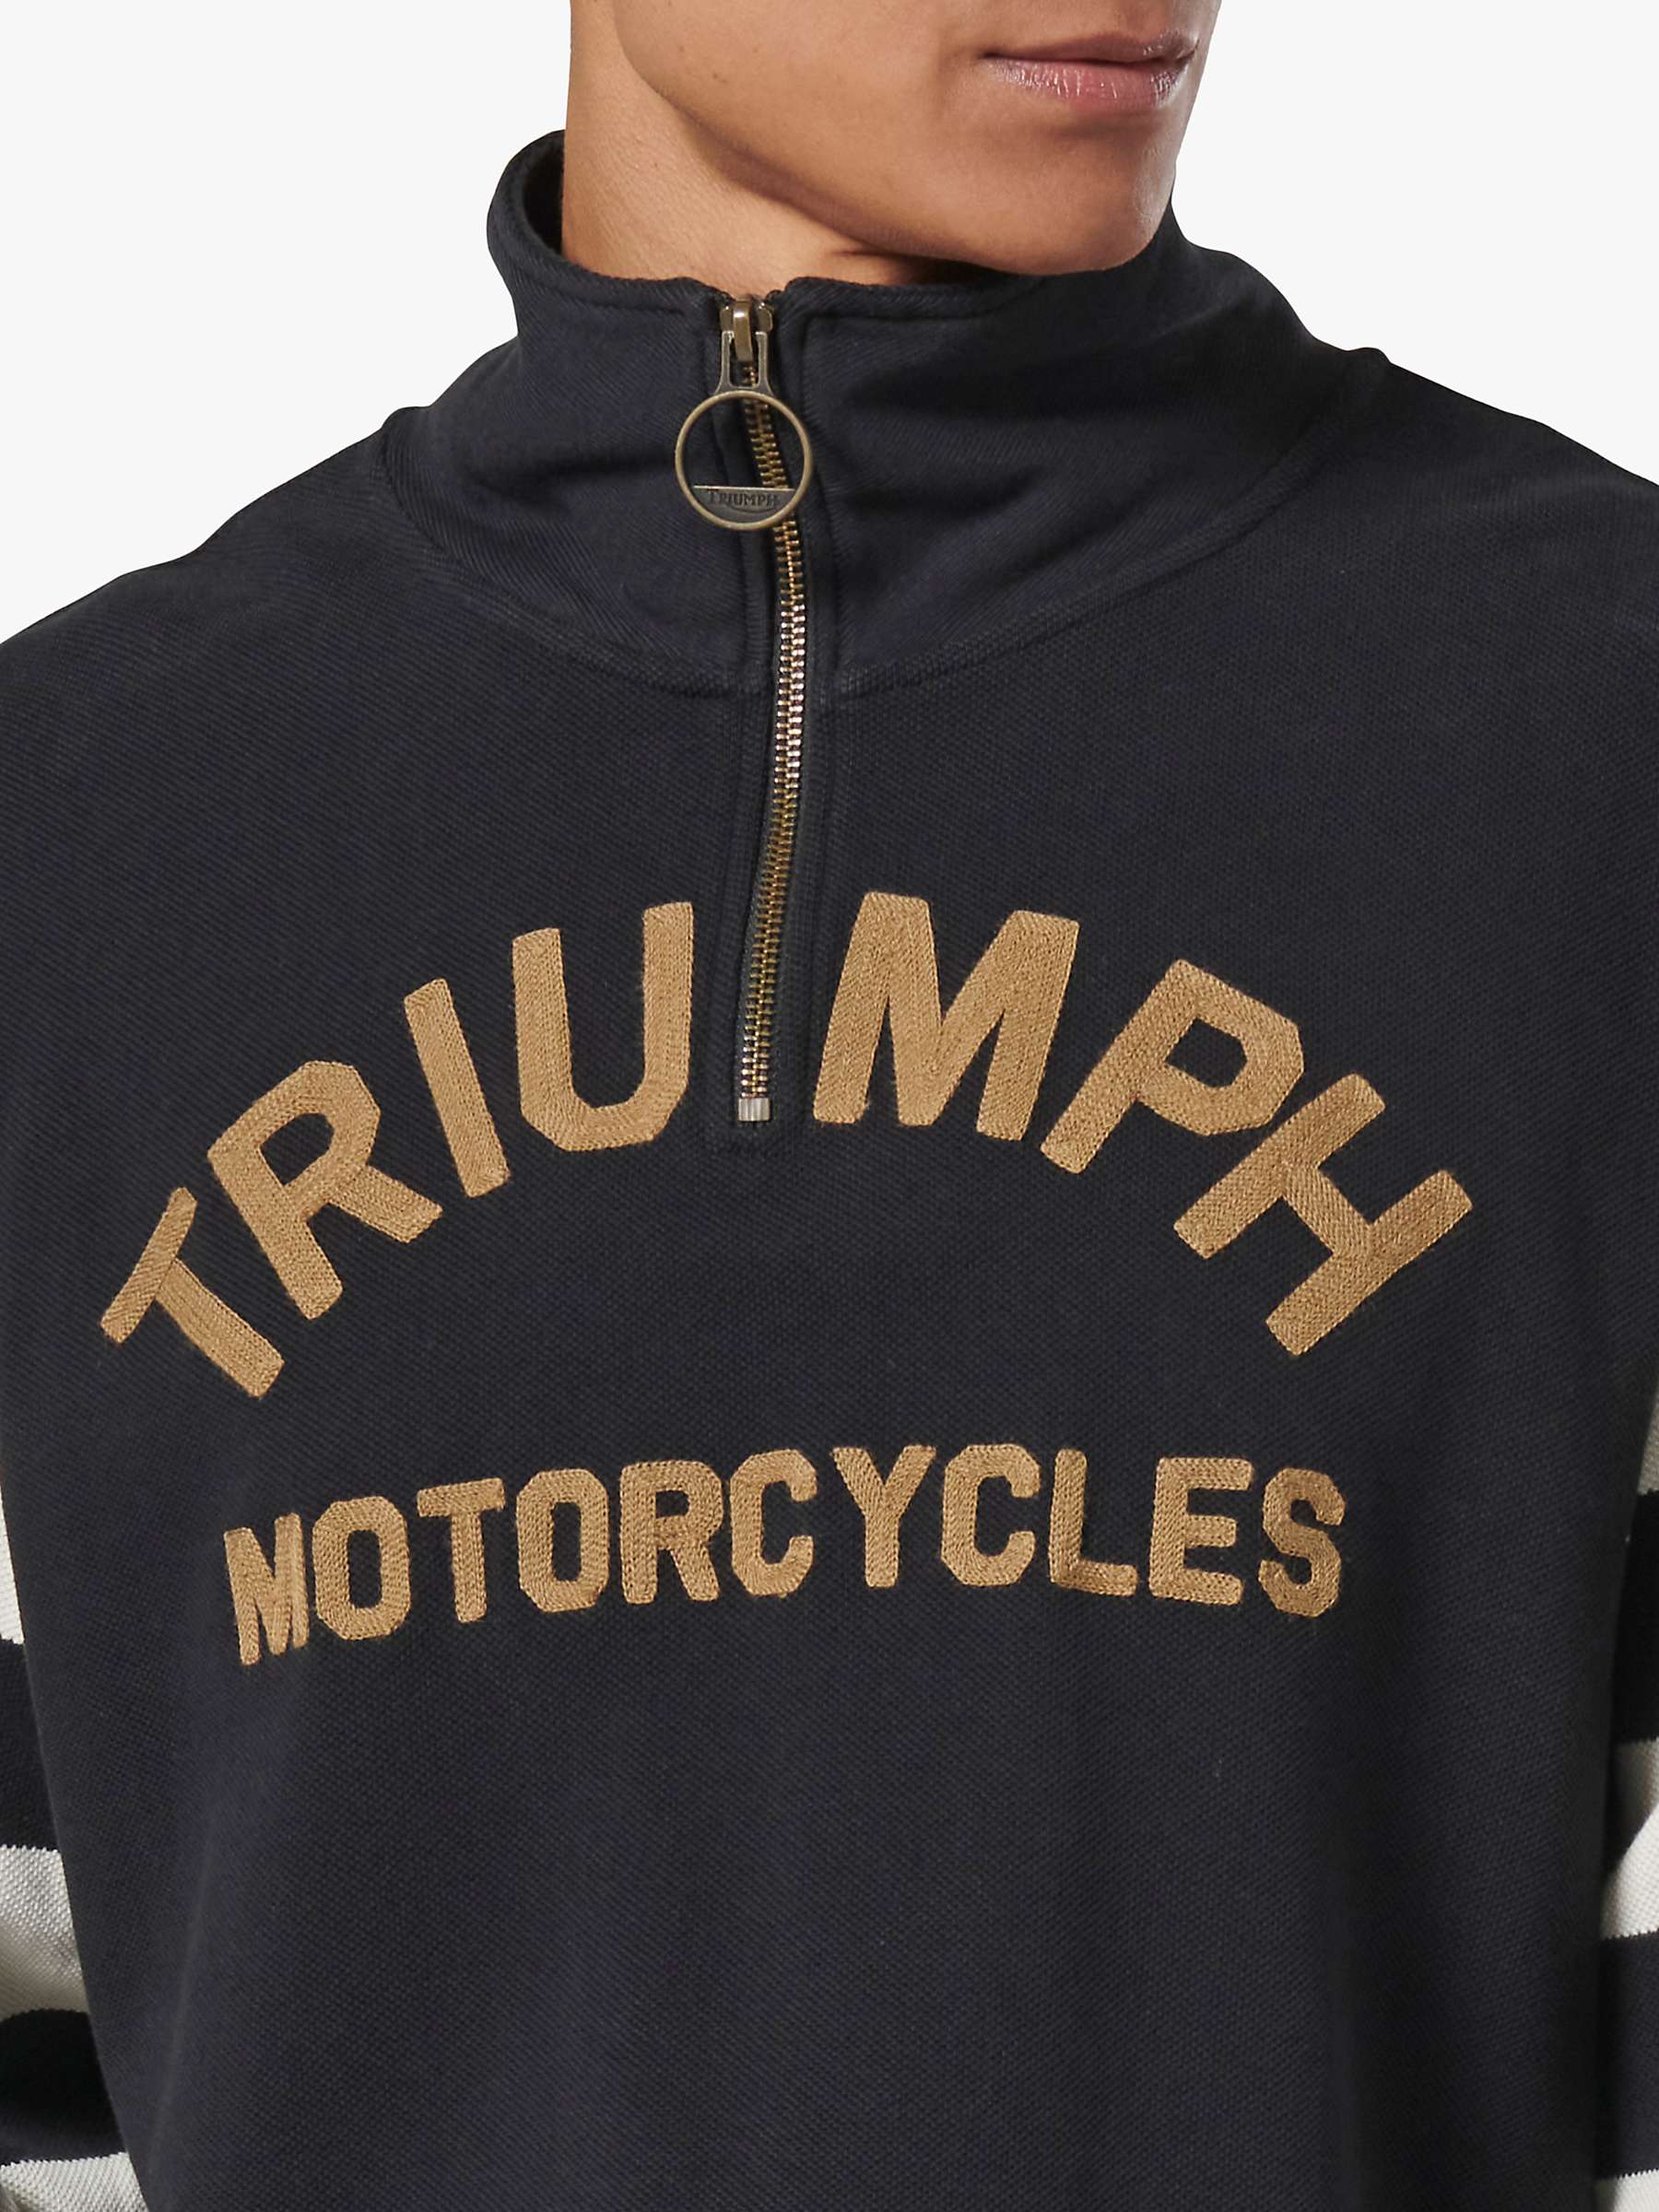 Buy Triumph Motorcycles Highly Quarter Zip Sweatshirt Online at johnlewis.com